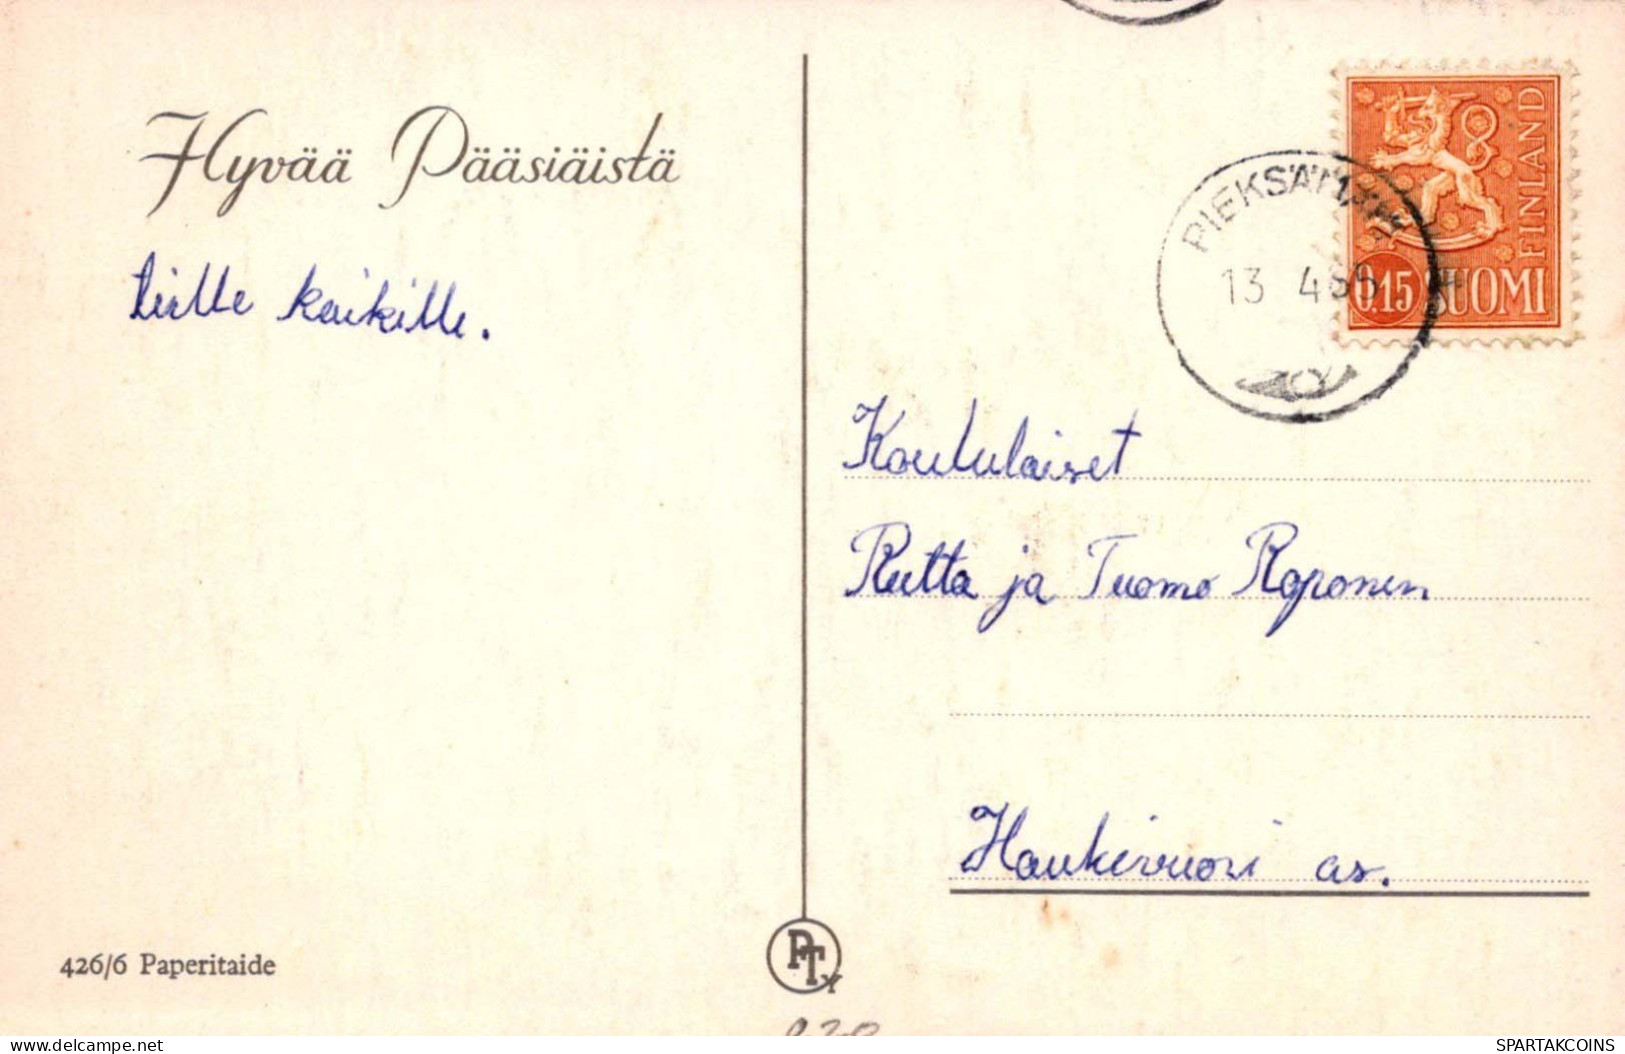 PASCUA NIÑOS HUEVO Vintage Tarjeta Postal CPA #PKE207.A - Easter